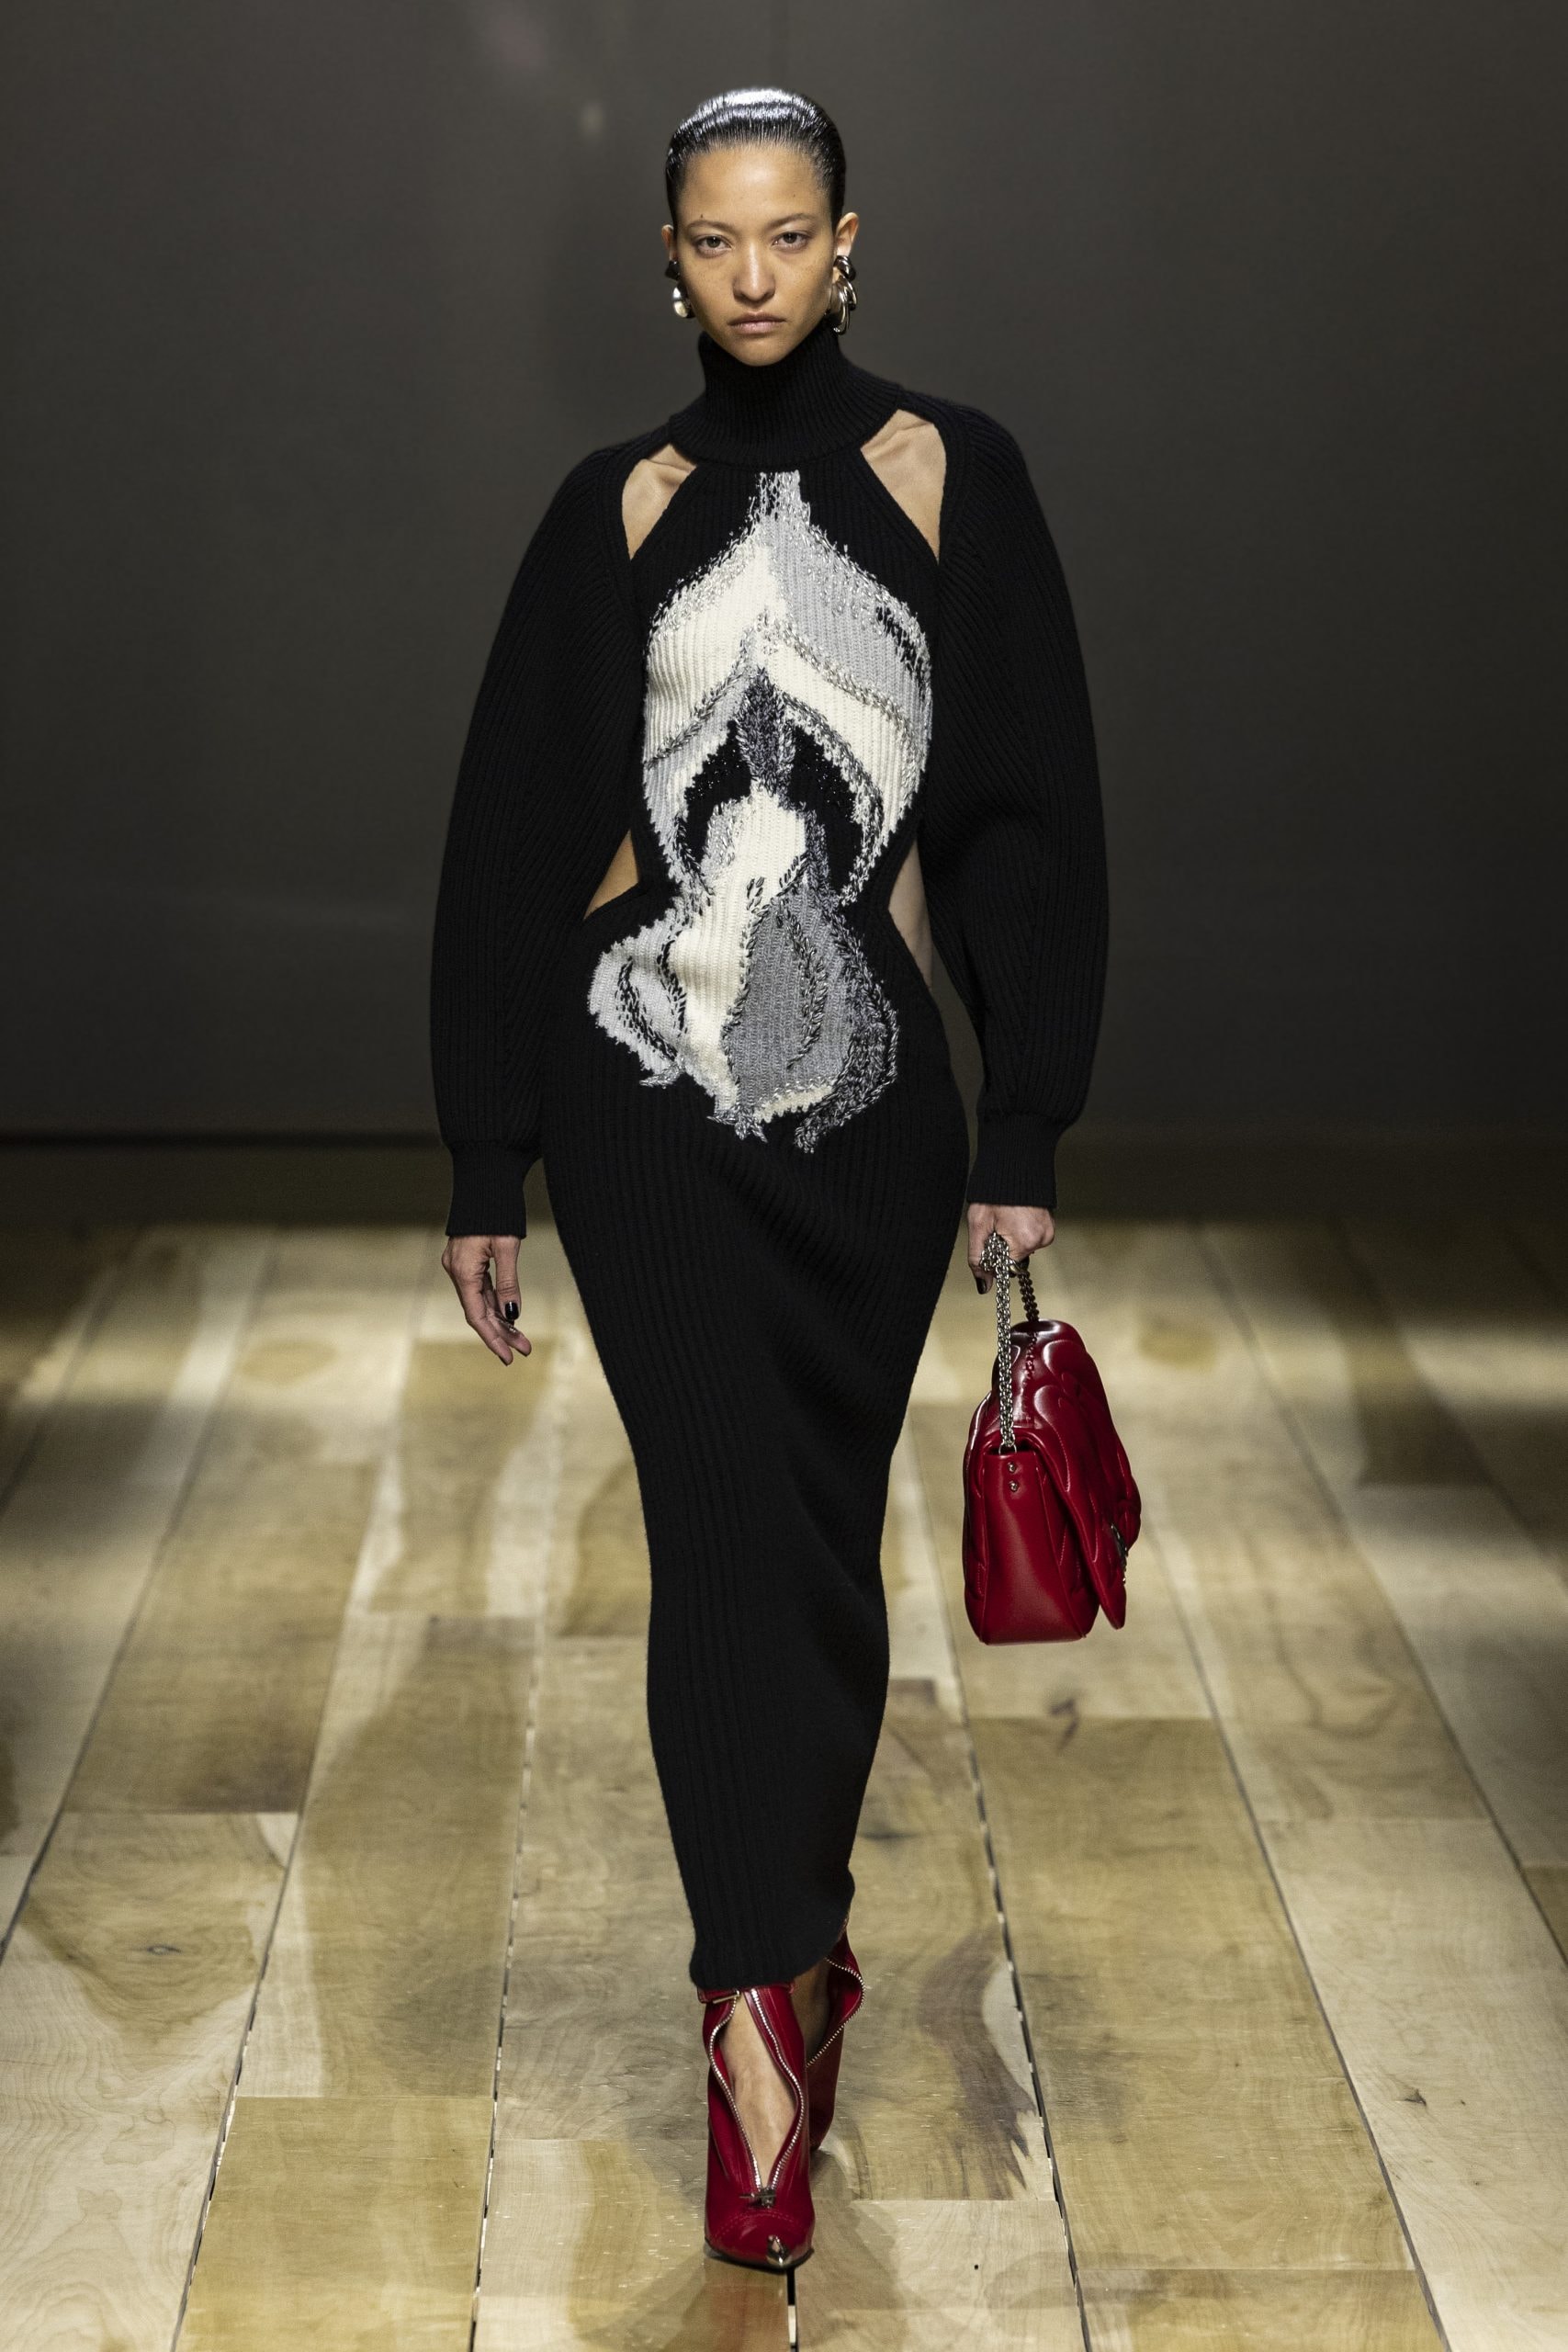 PFW Paris Fashion Week 巴黎時裝週 FW23 2023 秋冬系列 時裝展 時裝週 Alexander McQueen Sarah Burton 